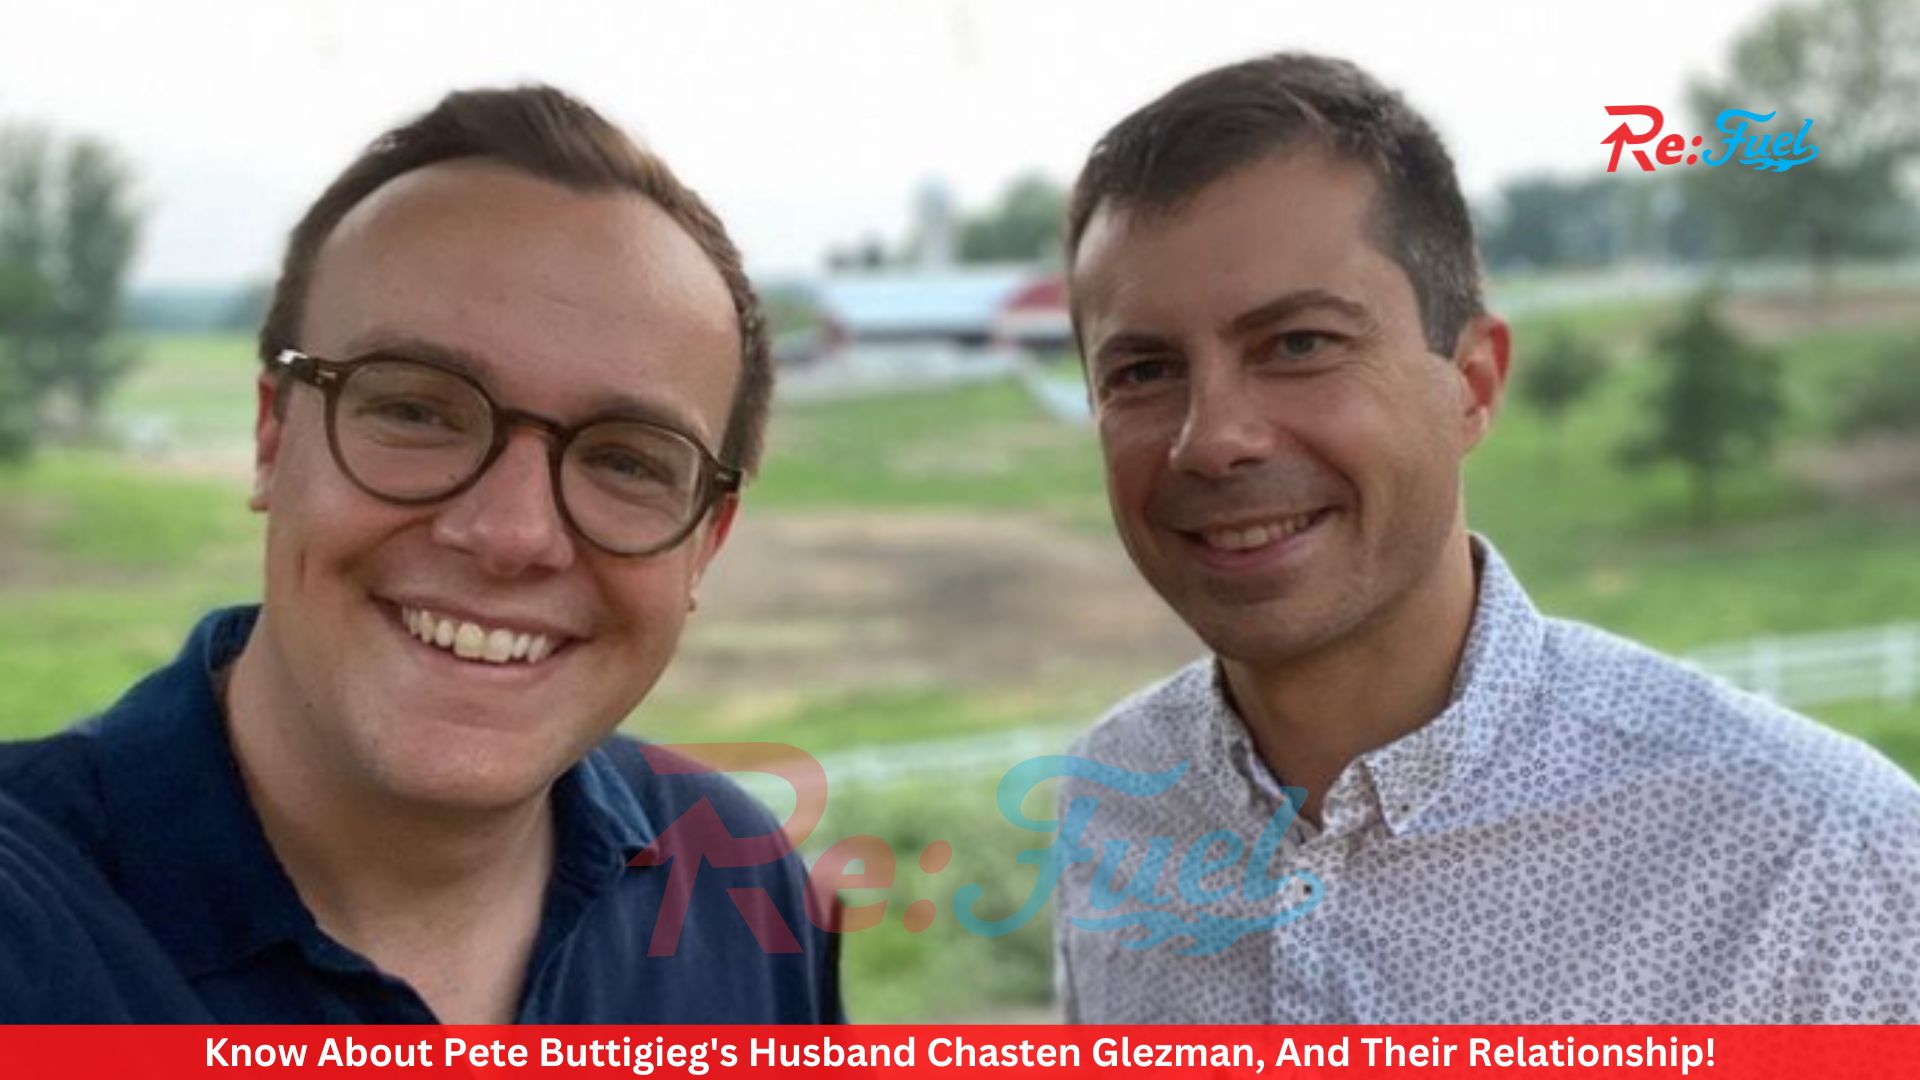 Know About Pete Buttigieg's Husband Chasten Glezman, And Their Relationship!